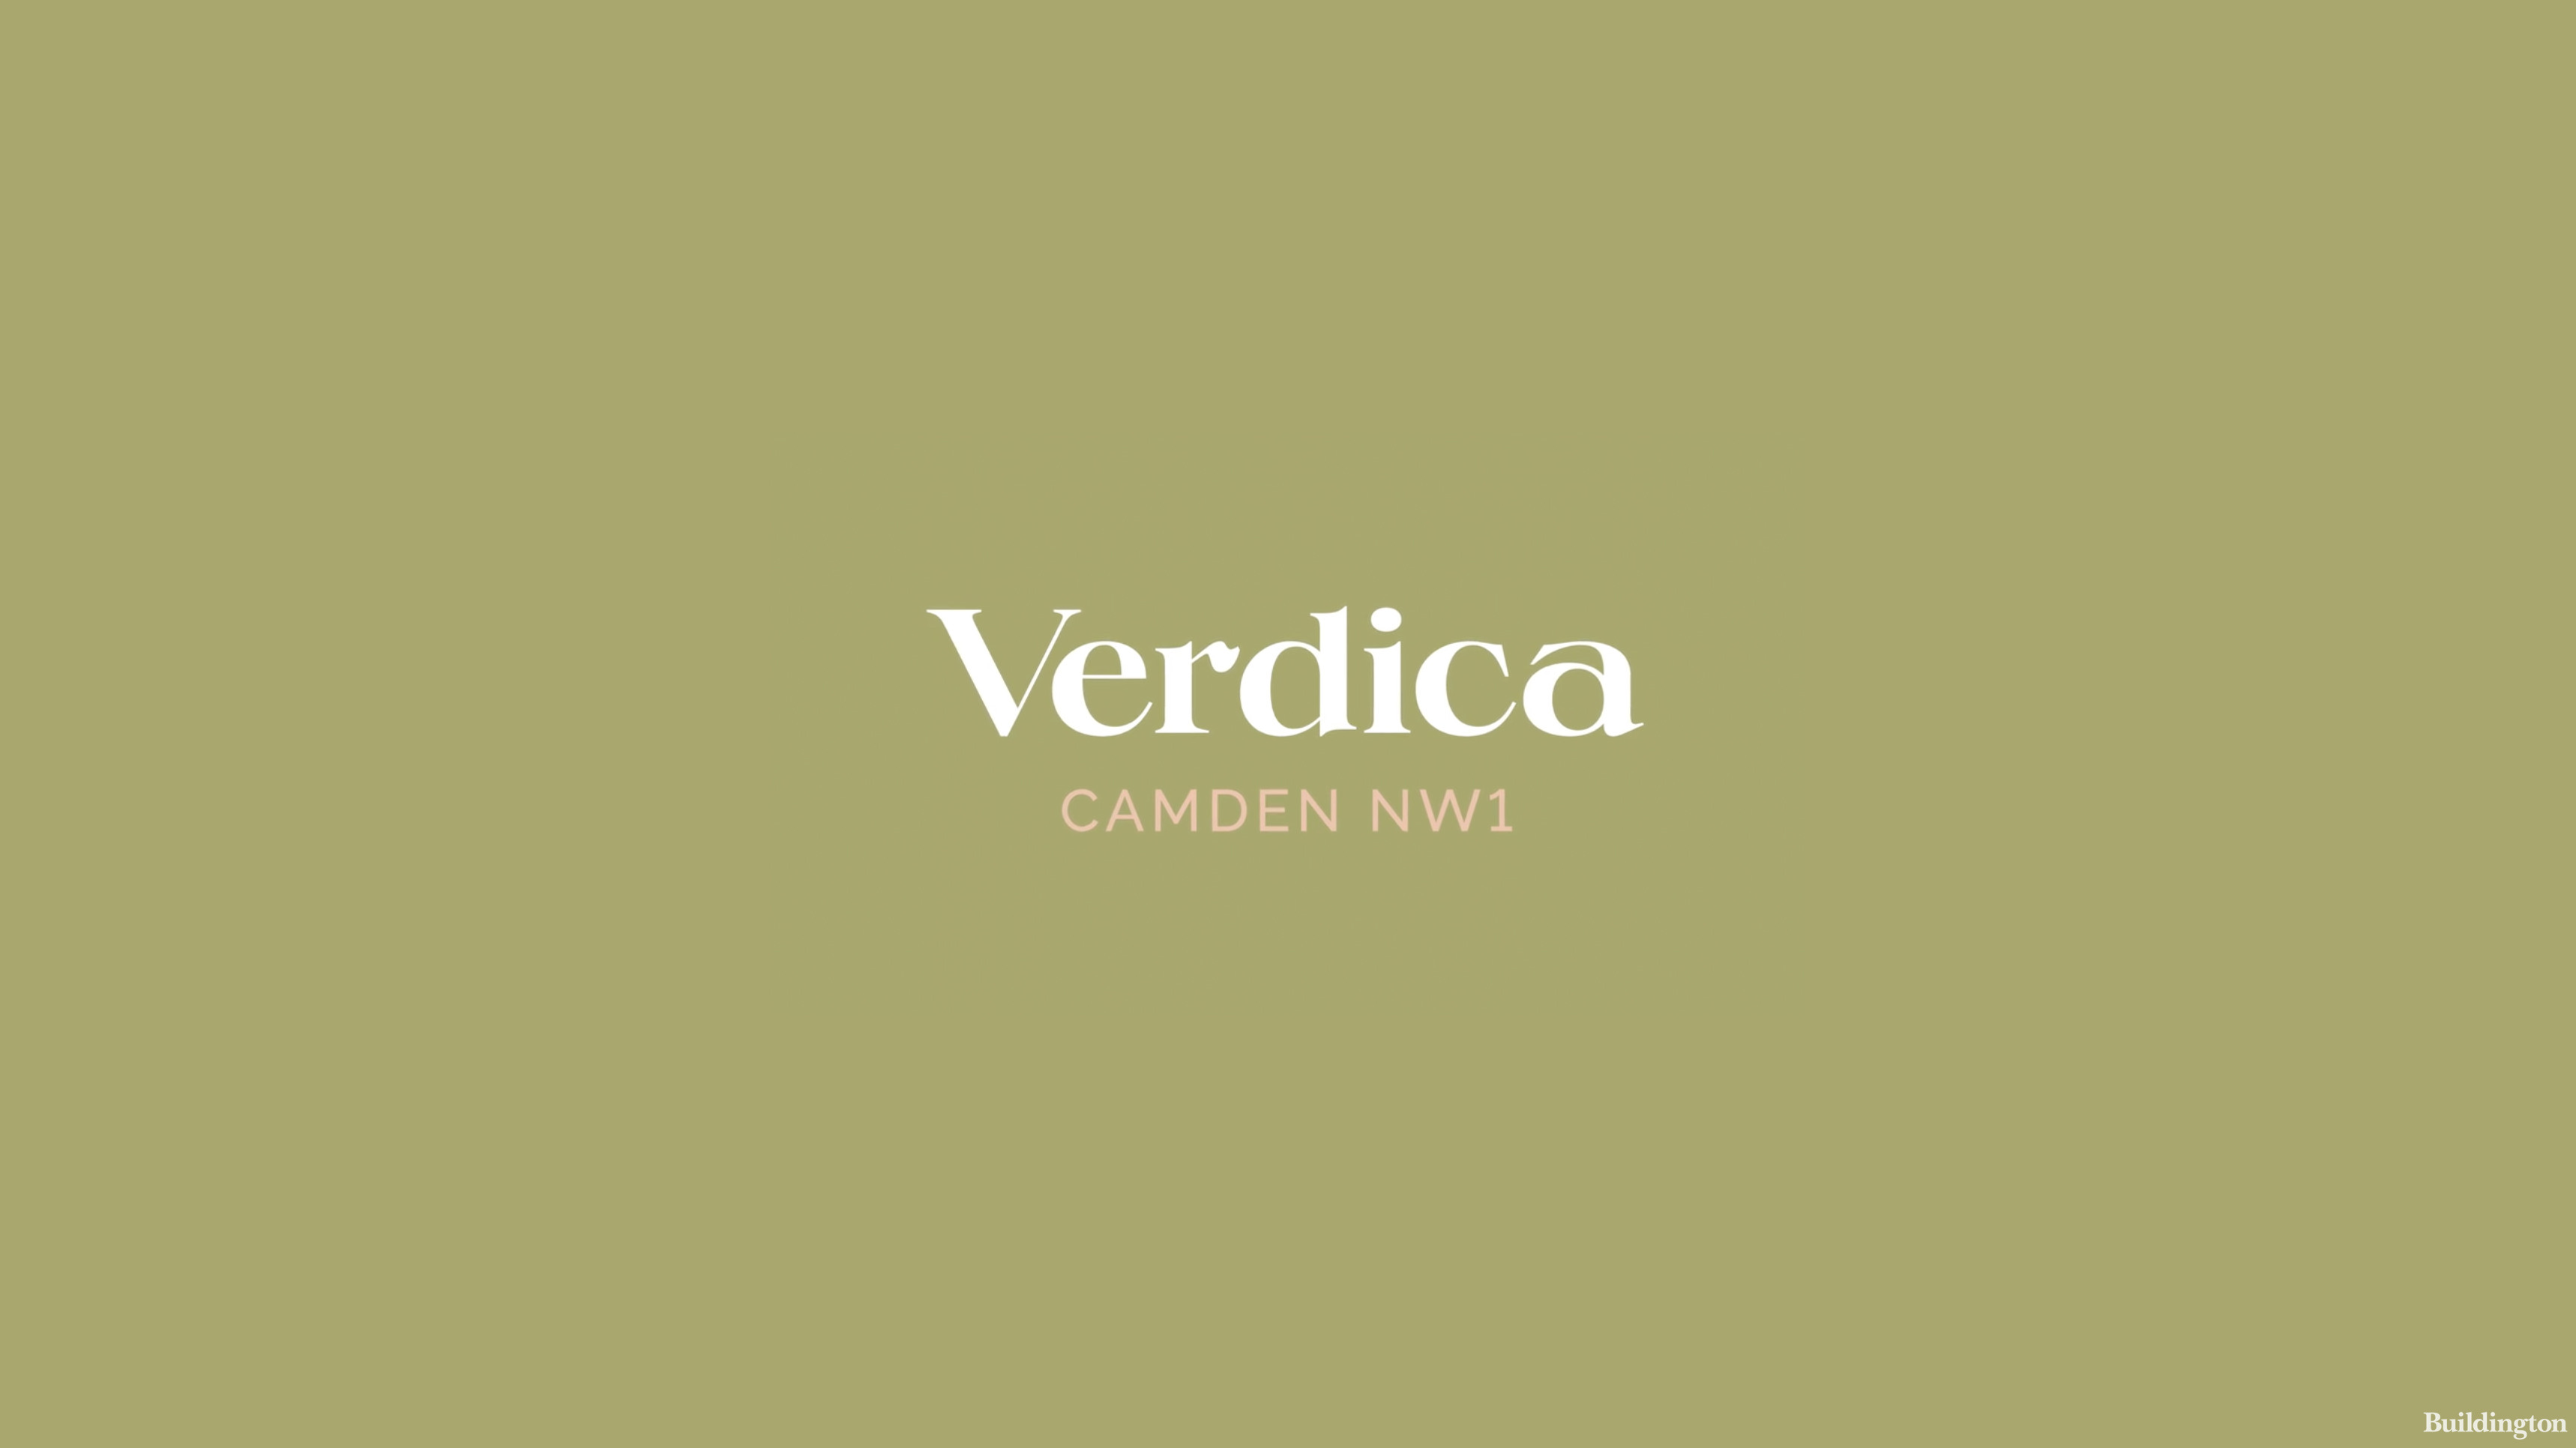 Development cover logo Verdica Camden by Vistry